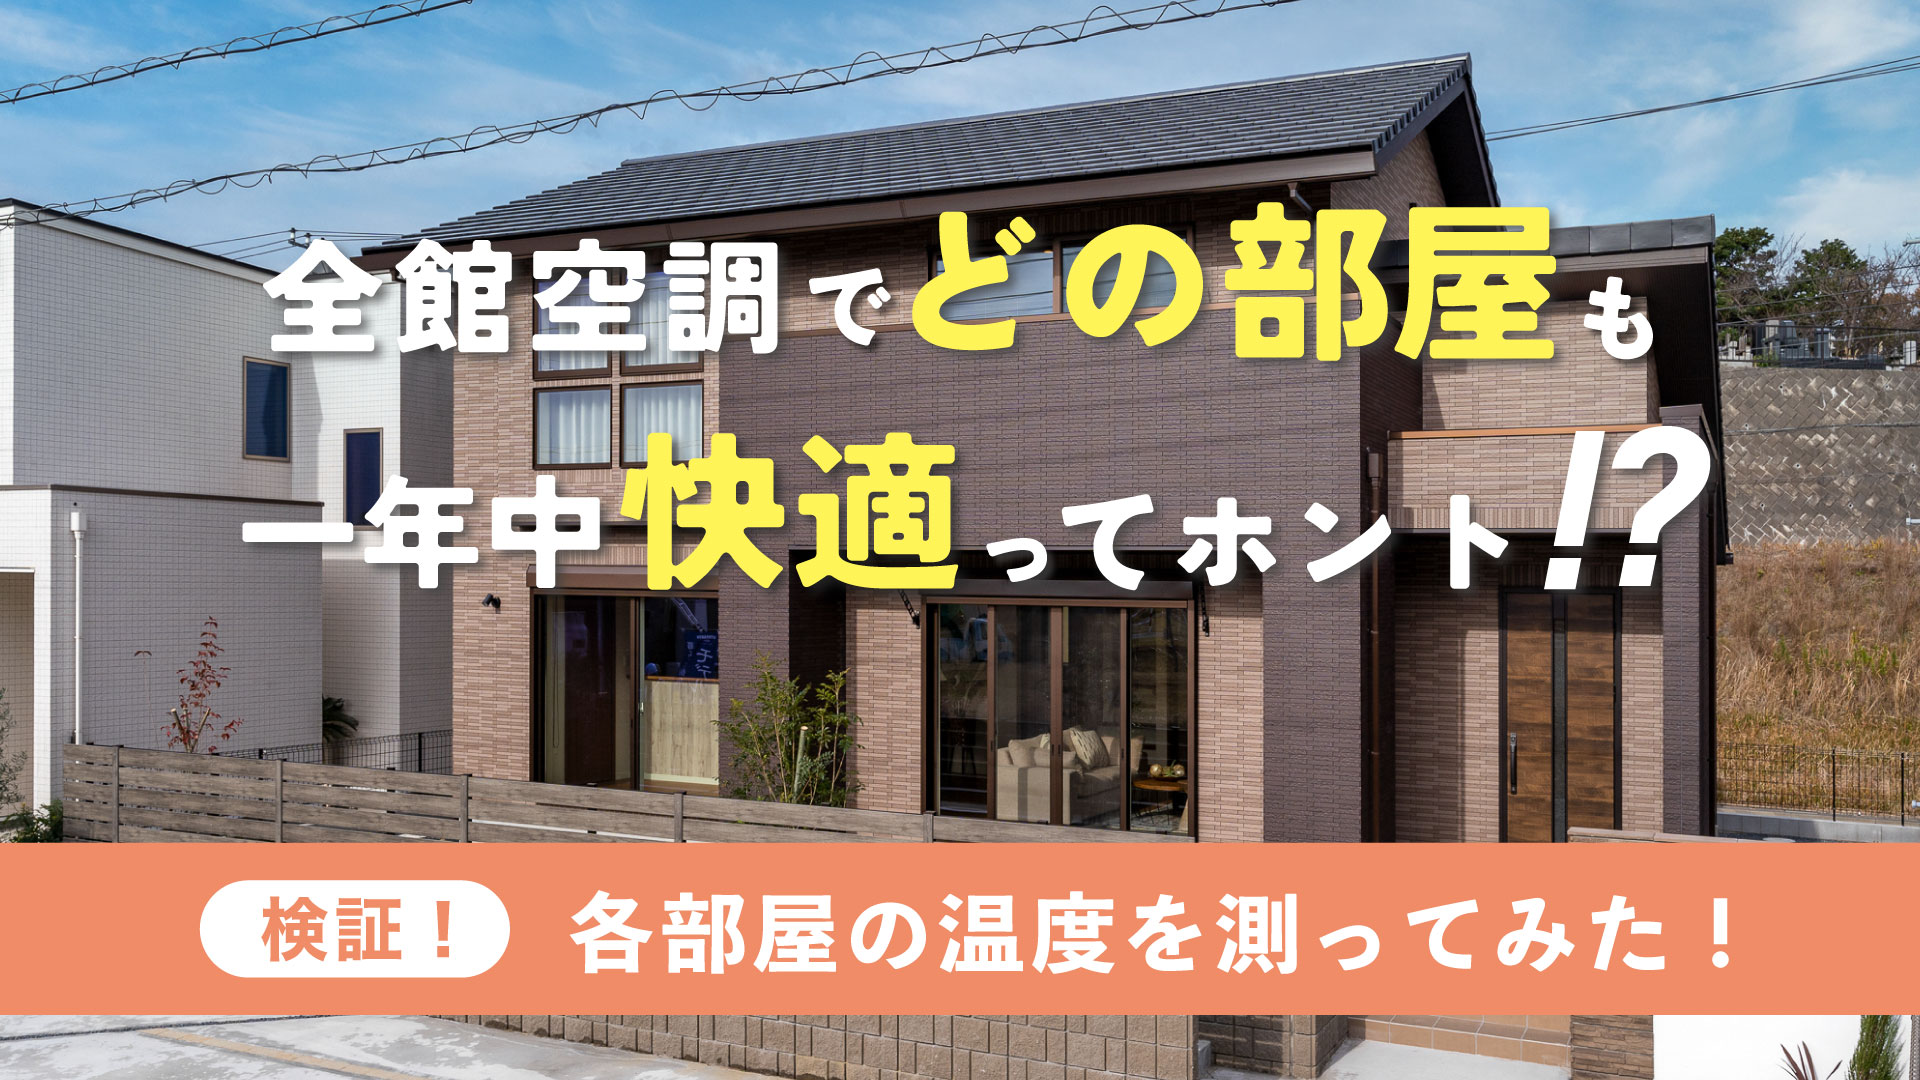 【MODEL HOUSE TOUR】全館空調の家